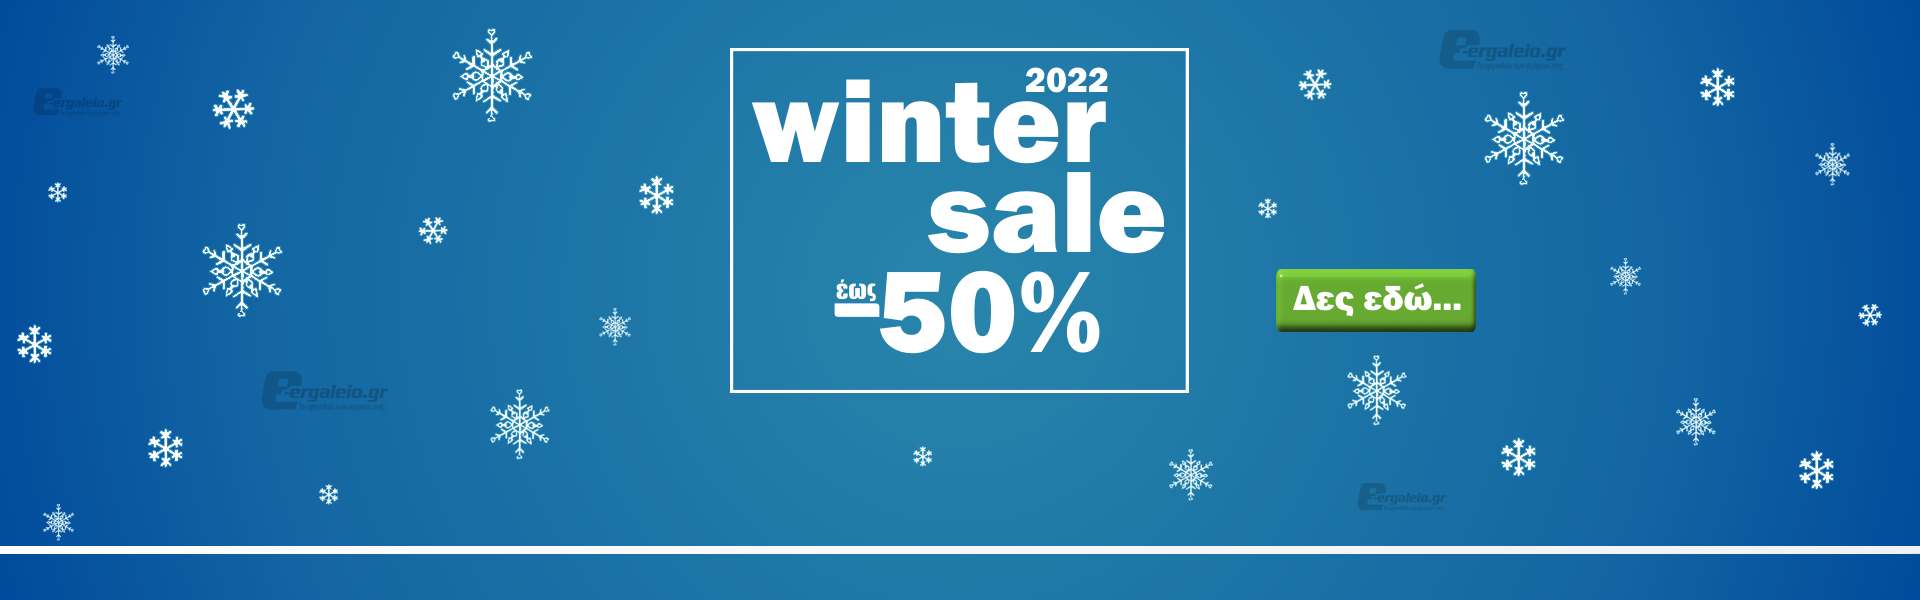 winter sales 2022 - e-ergaleio.gr - Δείτε όλες τις προσφορές εδώ!!!